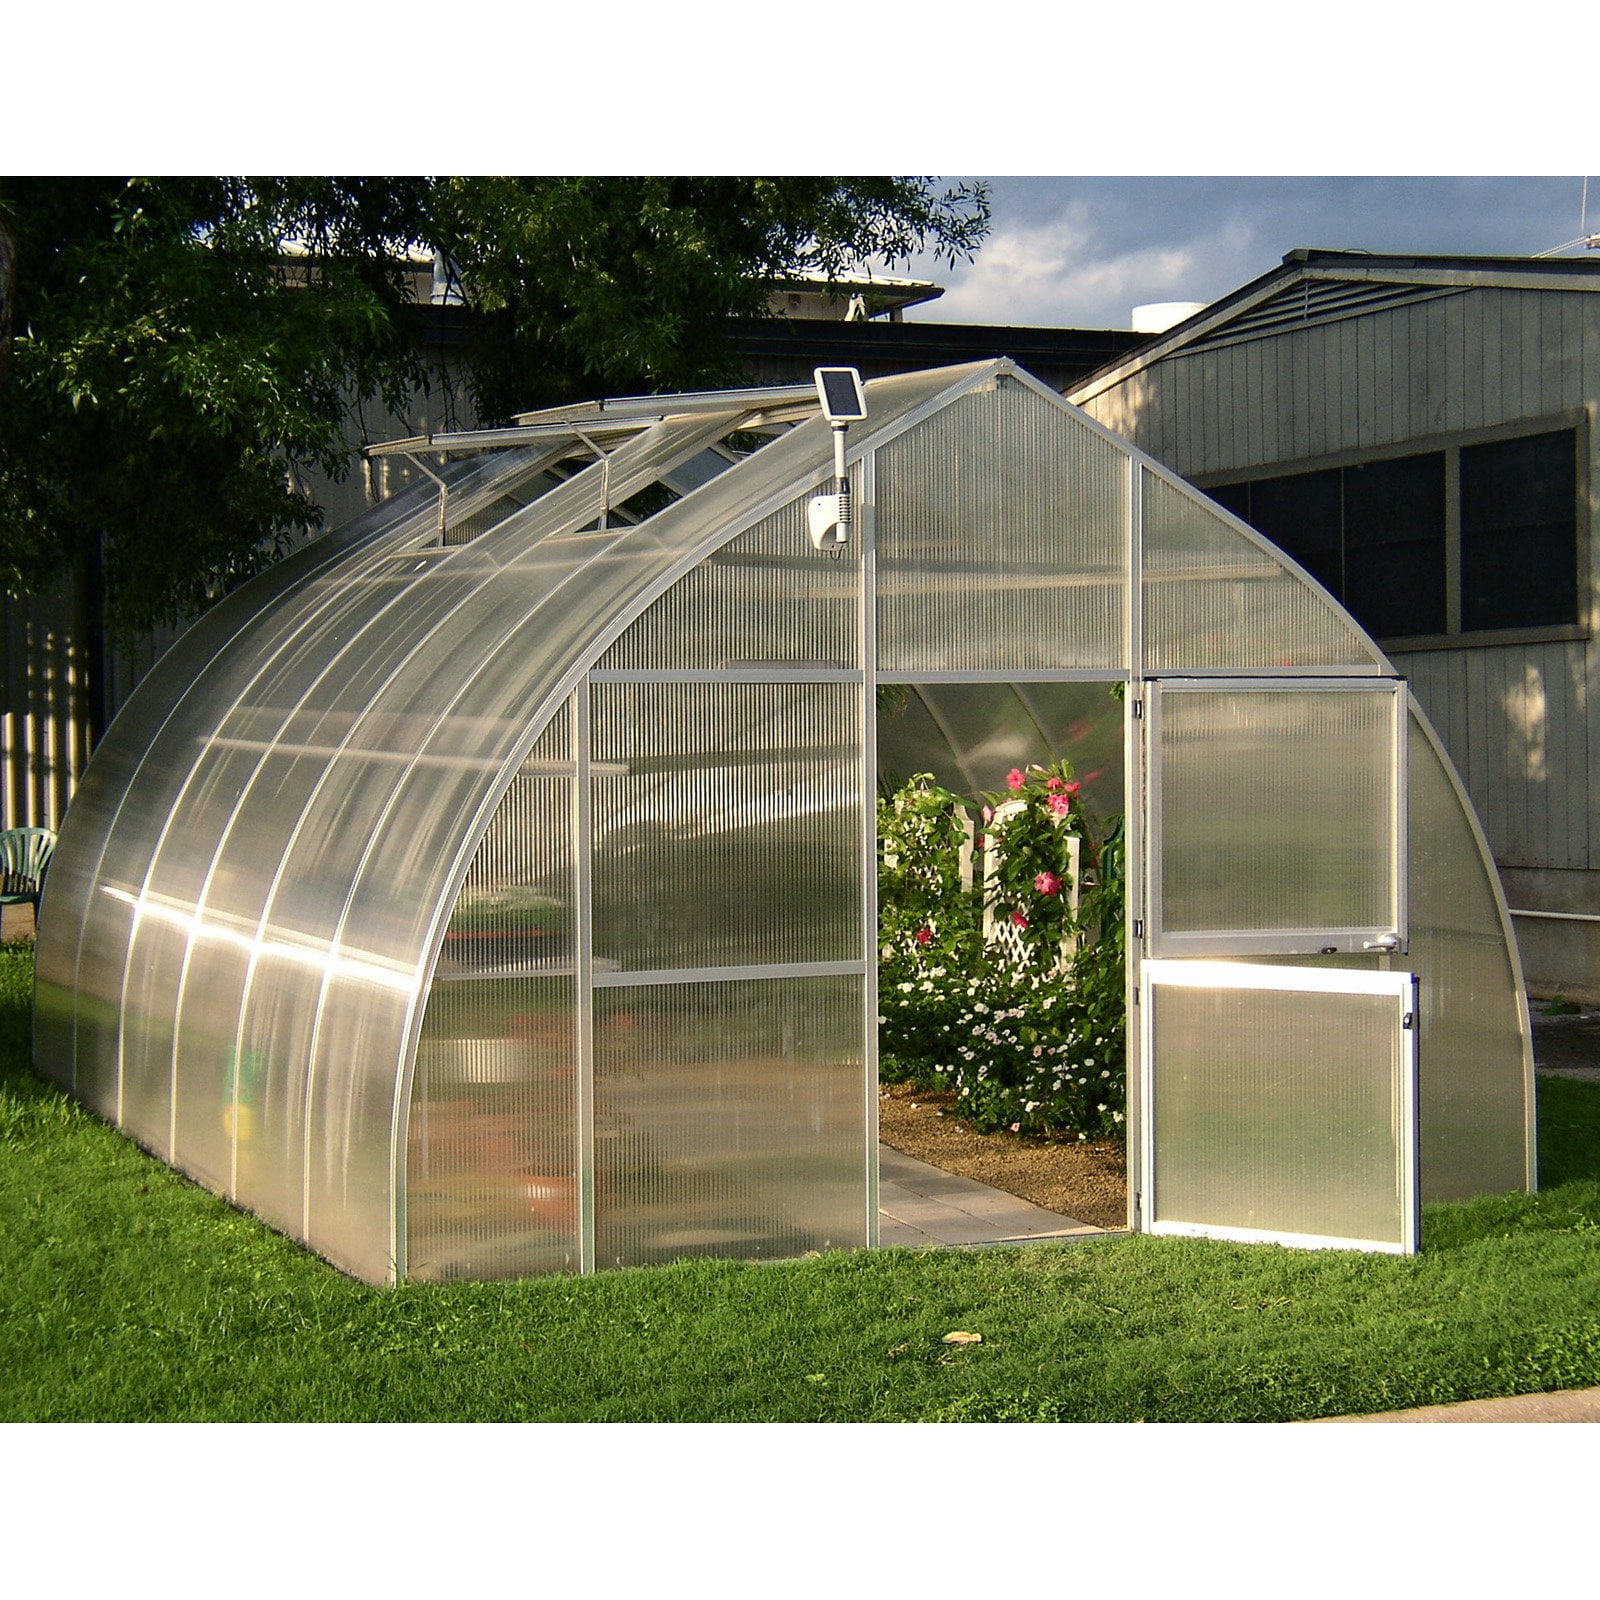 Hoklartherm RIGA XL 14 1 x 19 8 ft Greenhouse  Kit with Optional Foundation Frame  Walmart com 